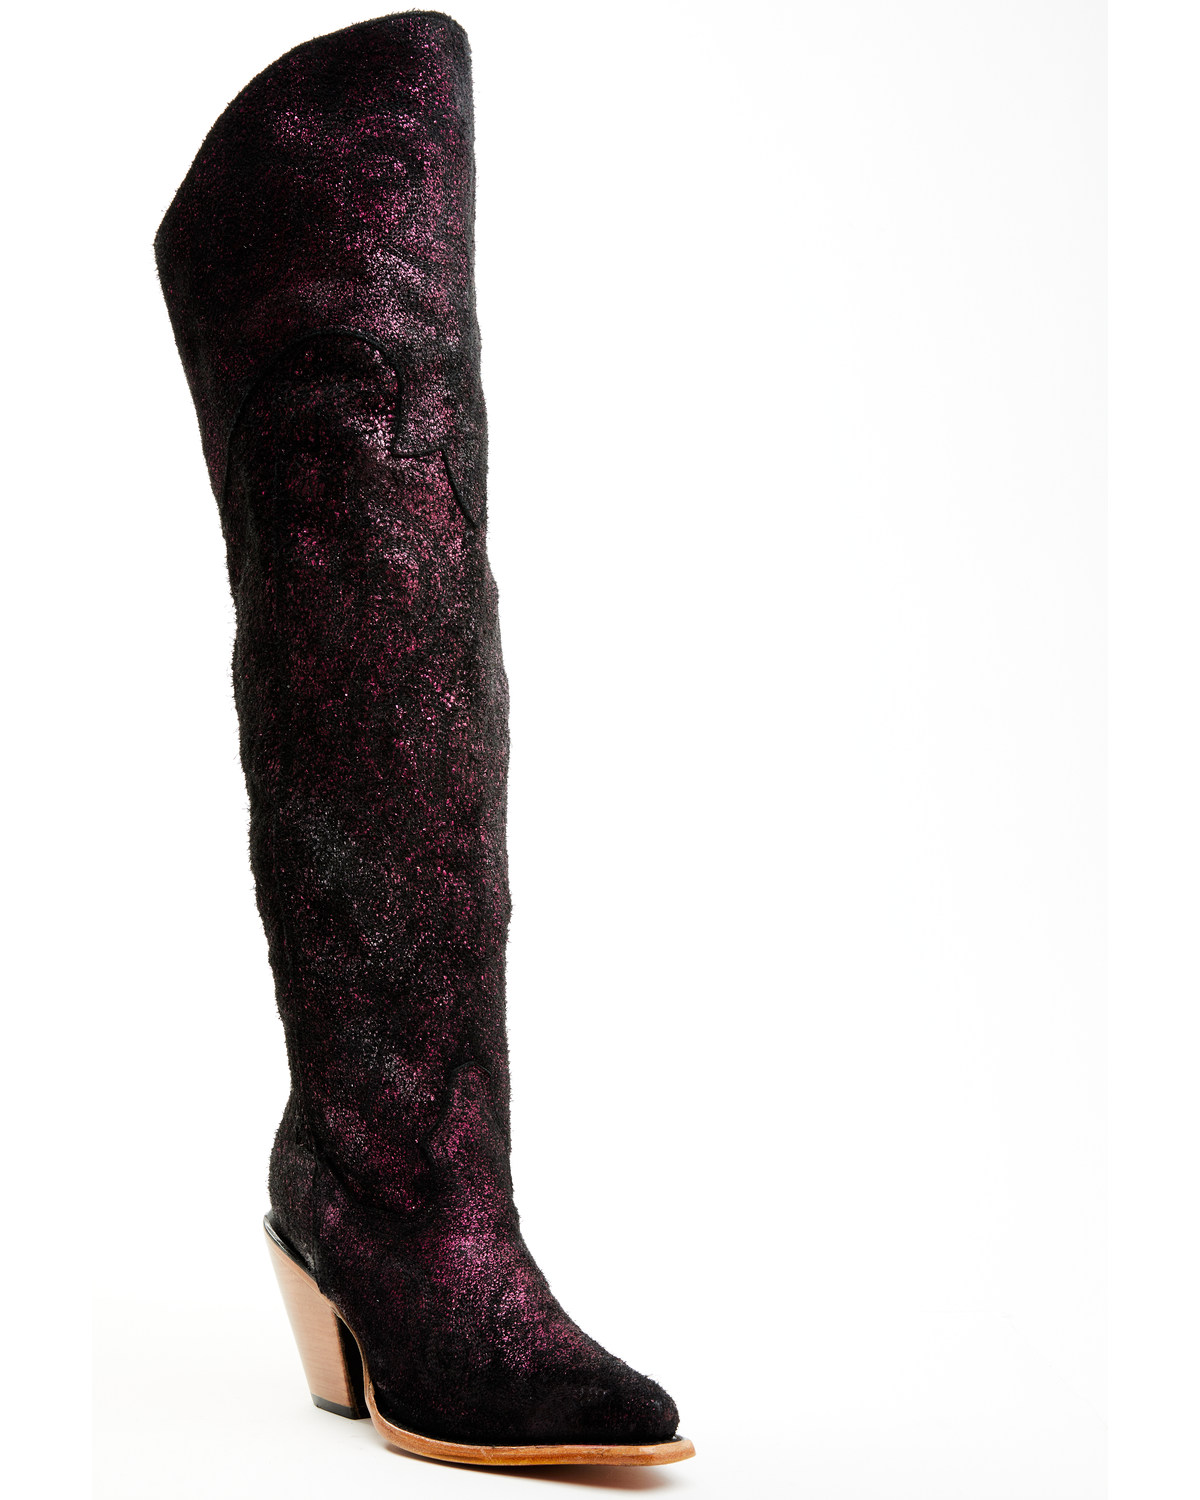 Corral Women's Metallic Tall Western Boots